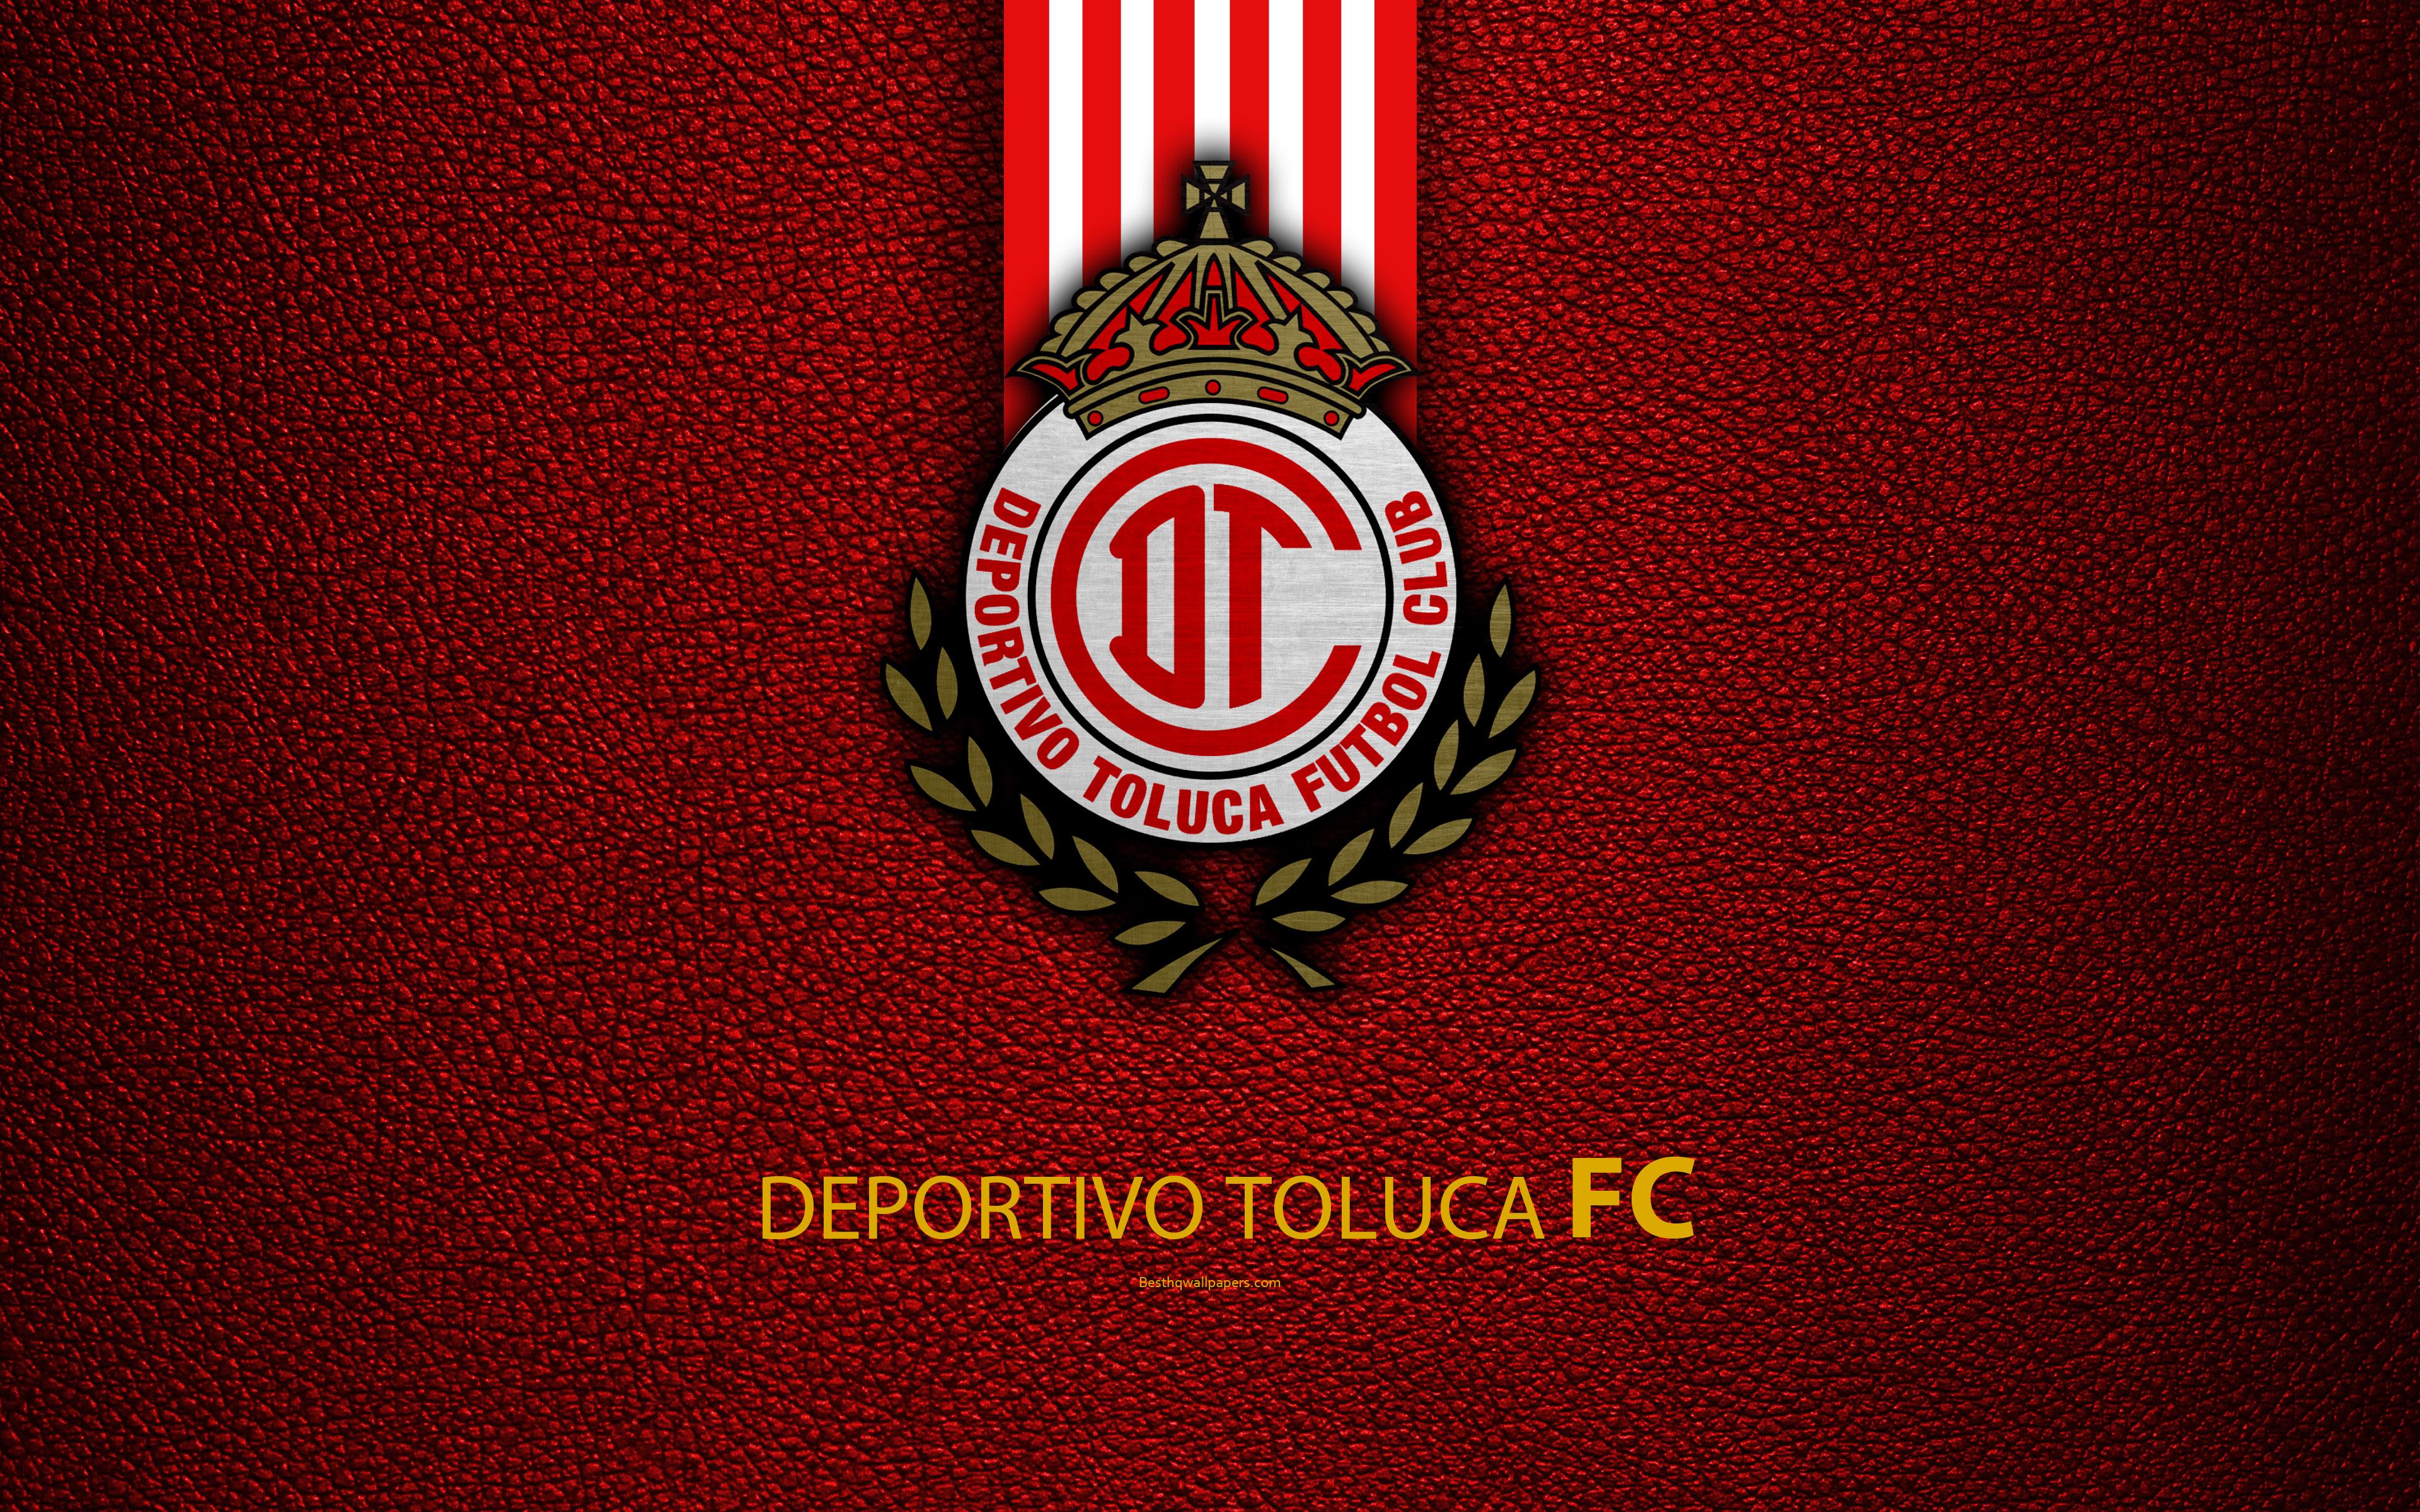 Download wallpaper Deportivo Toluca FC, 4k, leather texture, logo